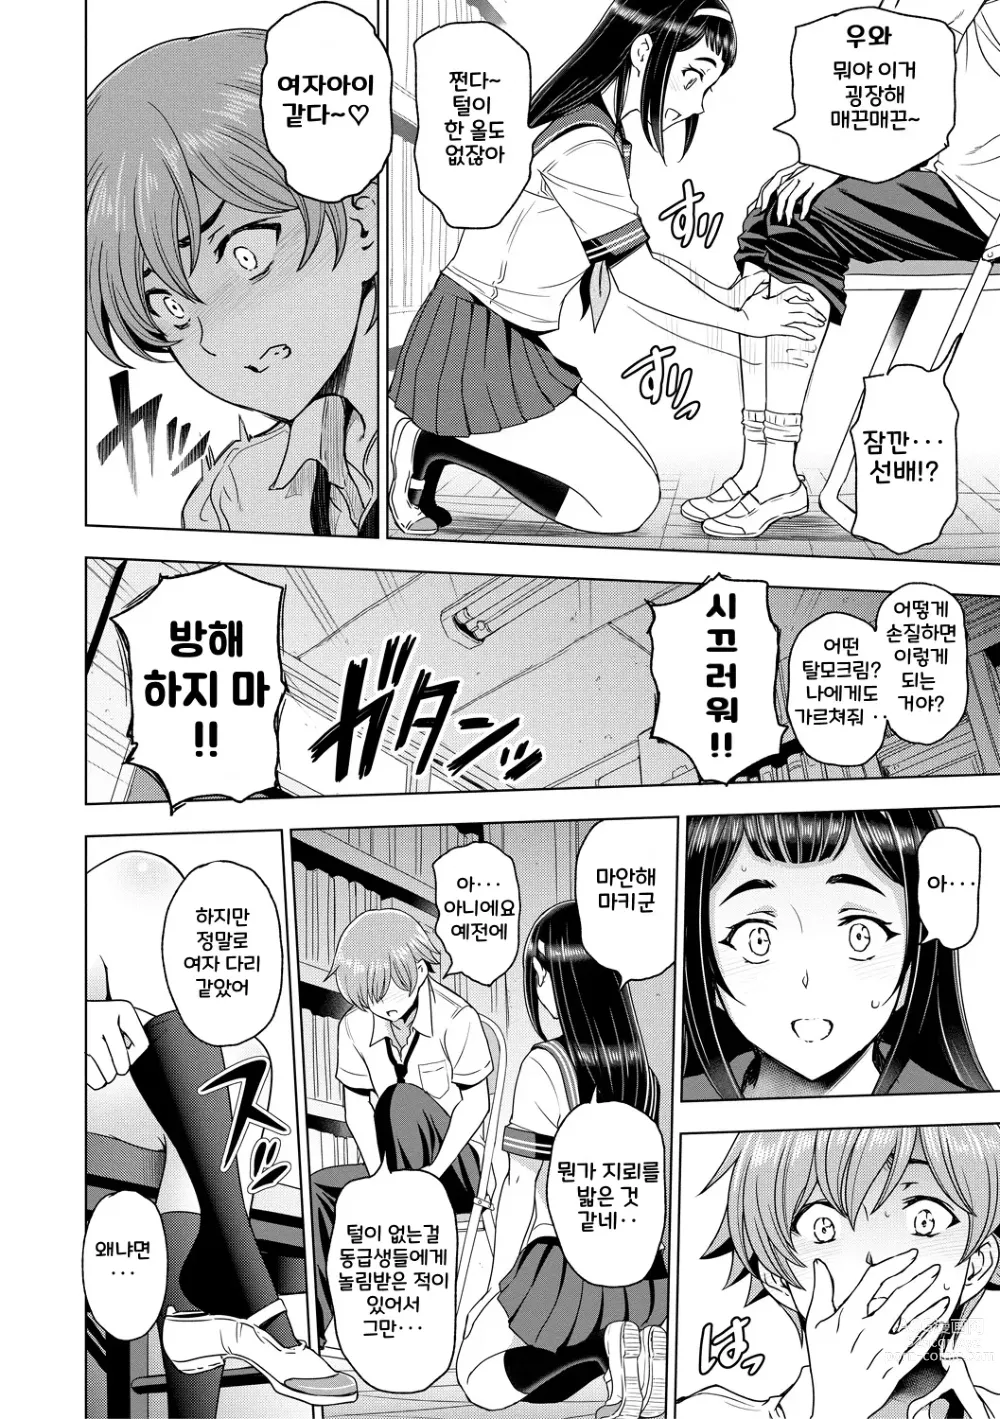 Page 10 of manga Nee Ecchi shichao kka - Hey, lets have sex.